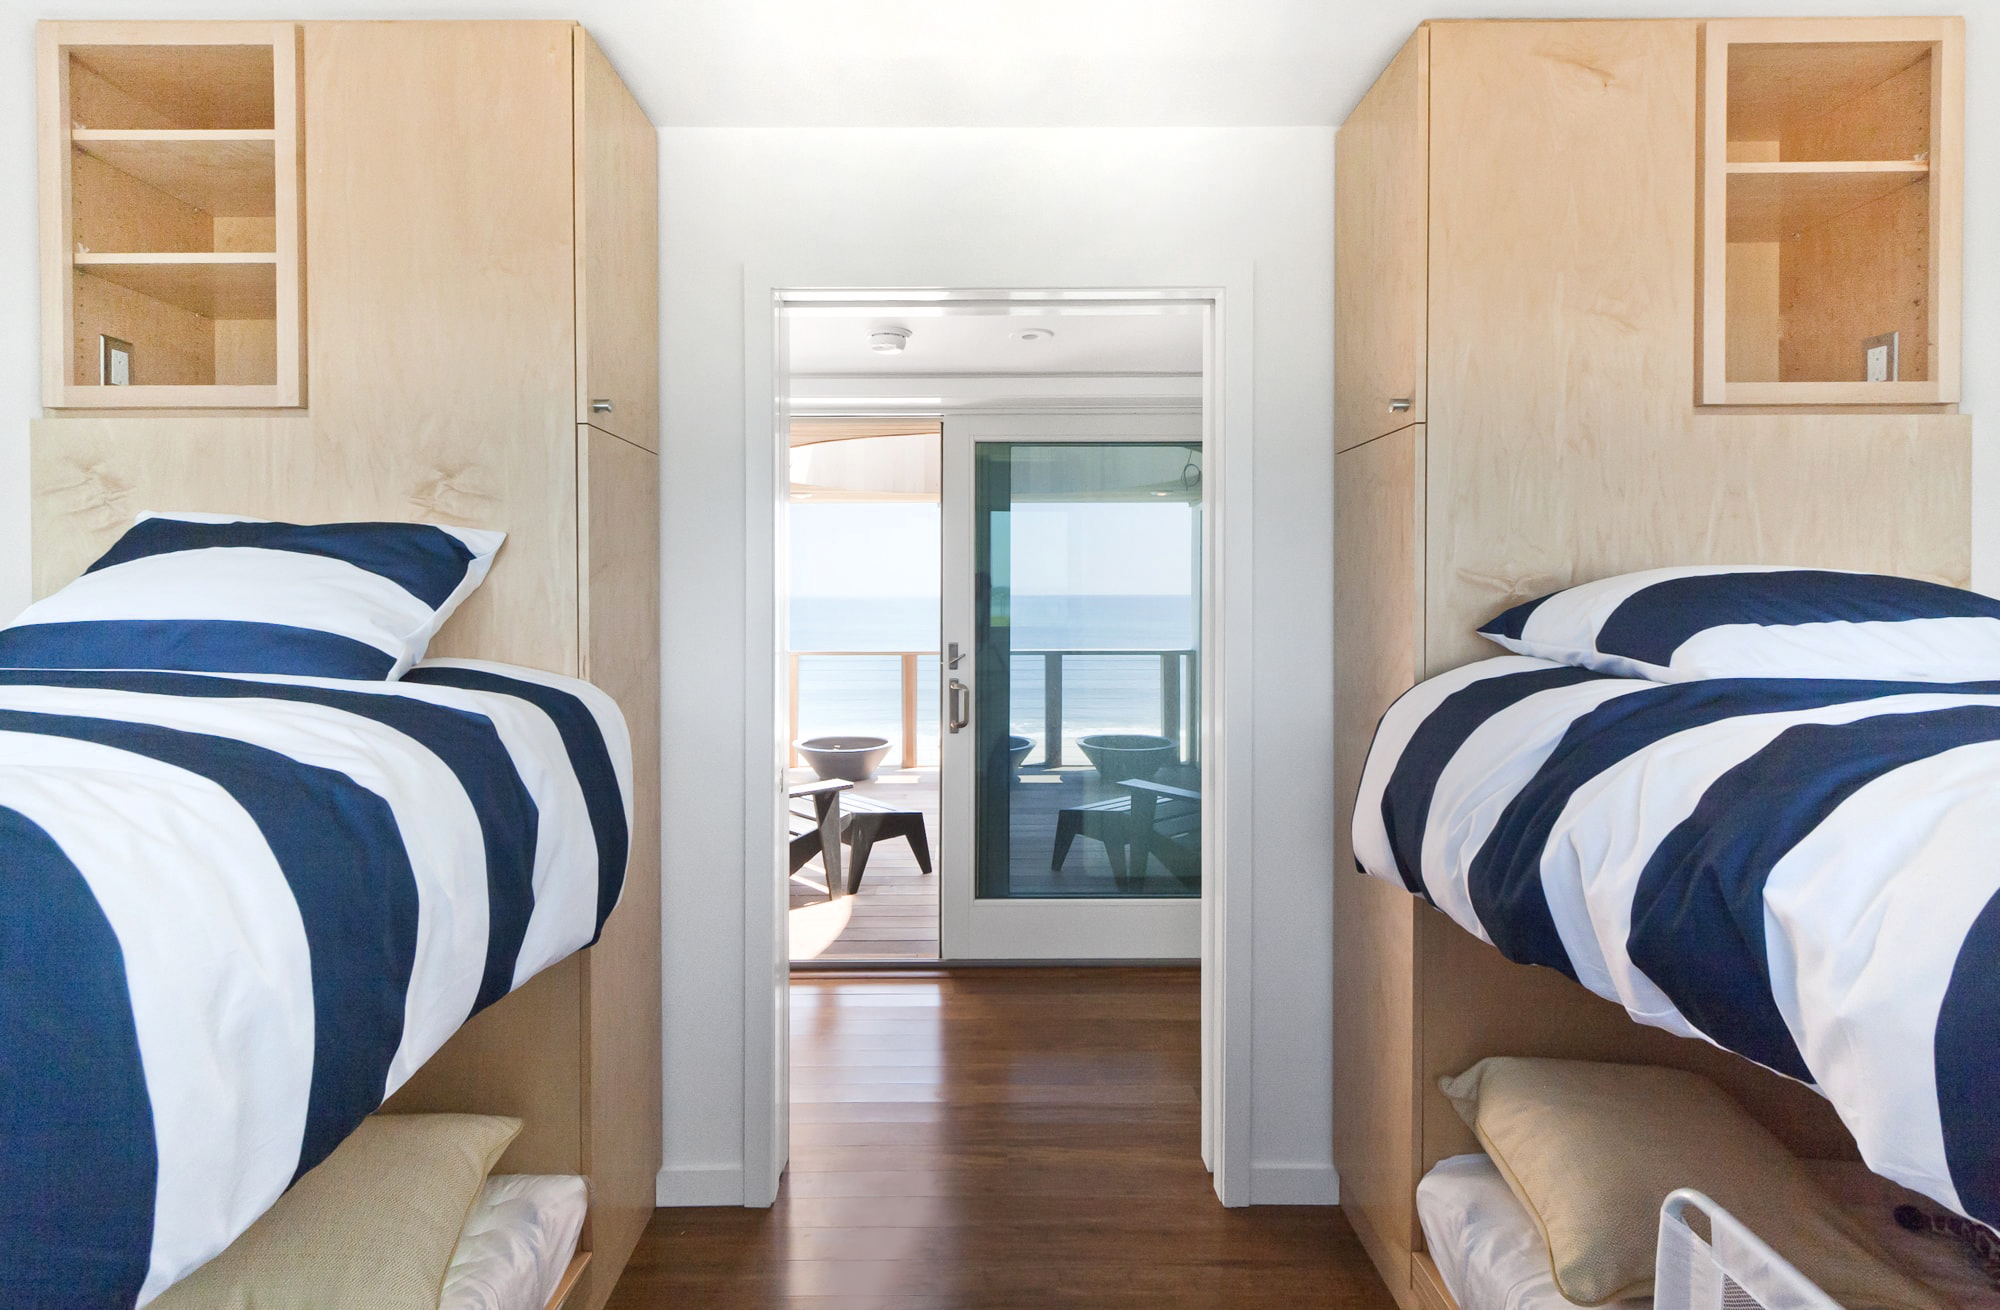 10-res4-resolution-4-architecture-modern-modular-home-prefab-dune-road-beach-house-interior-bedroom.jpg